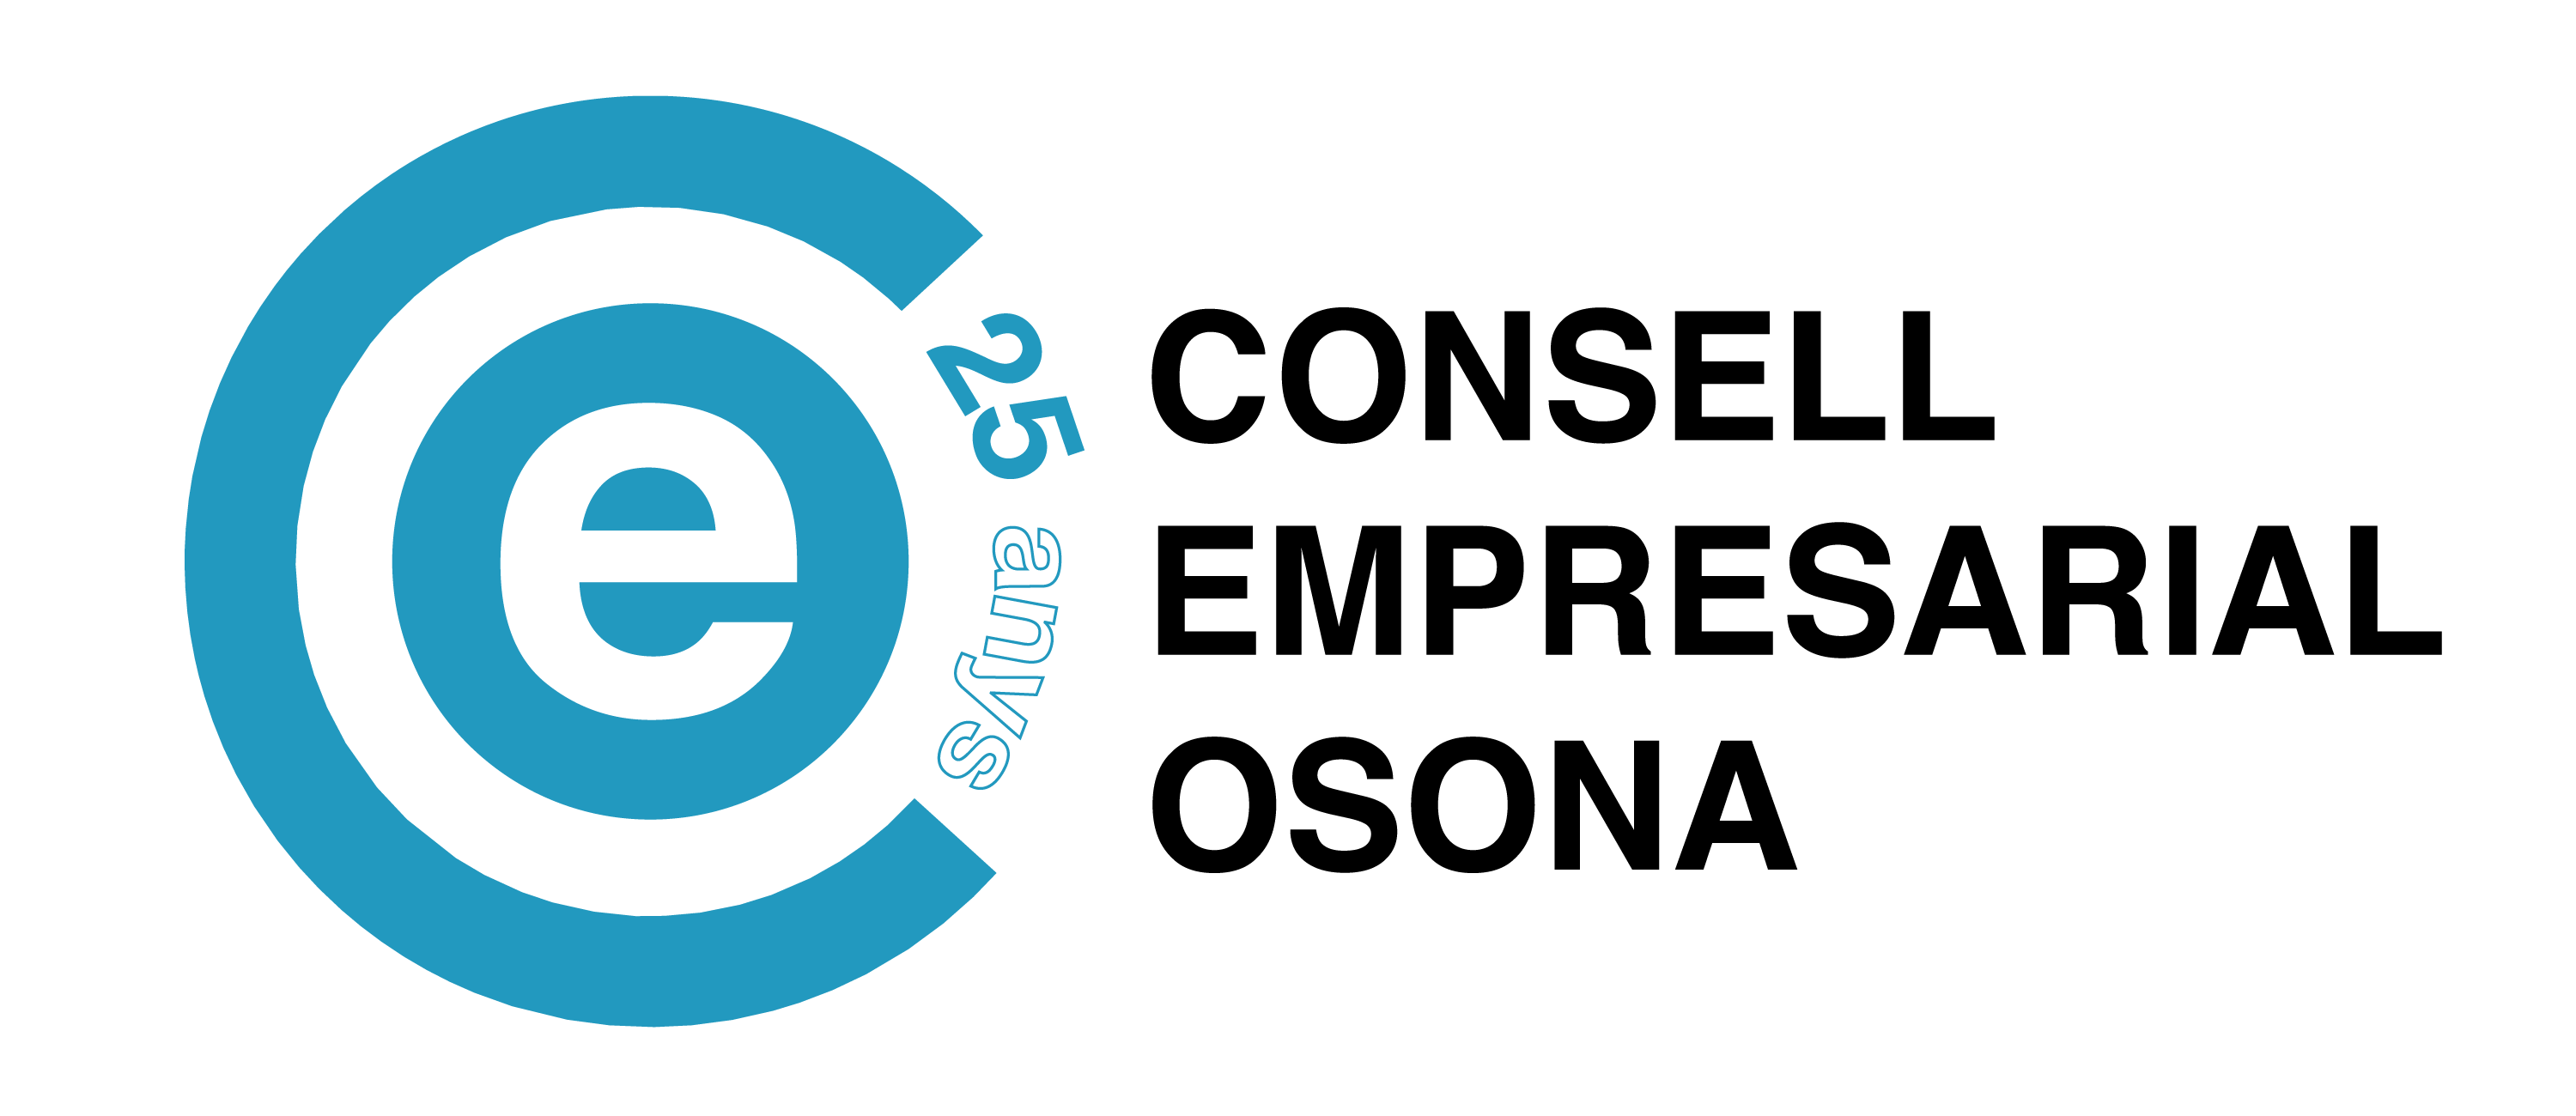 Logo Consell